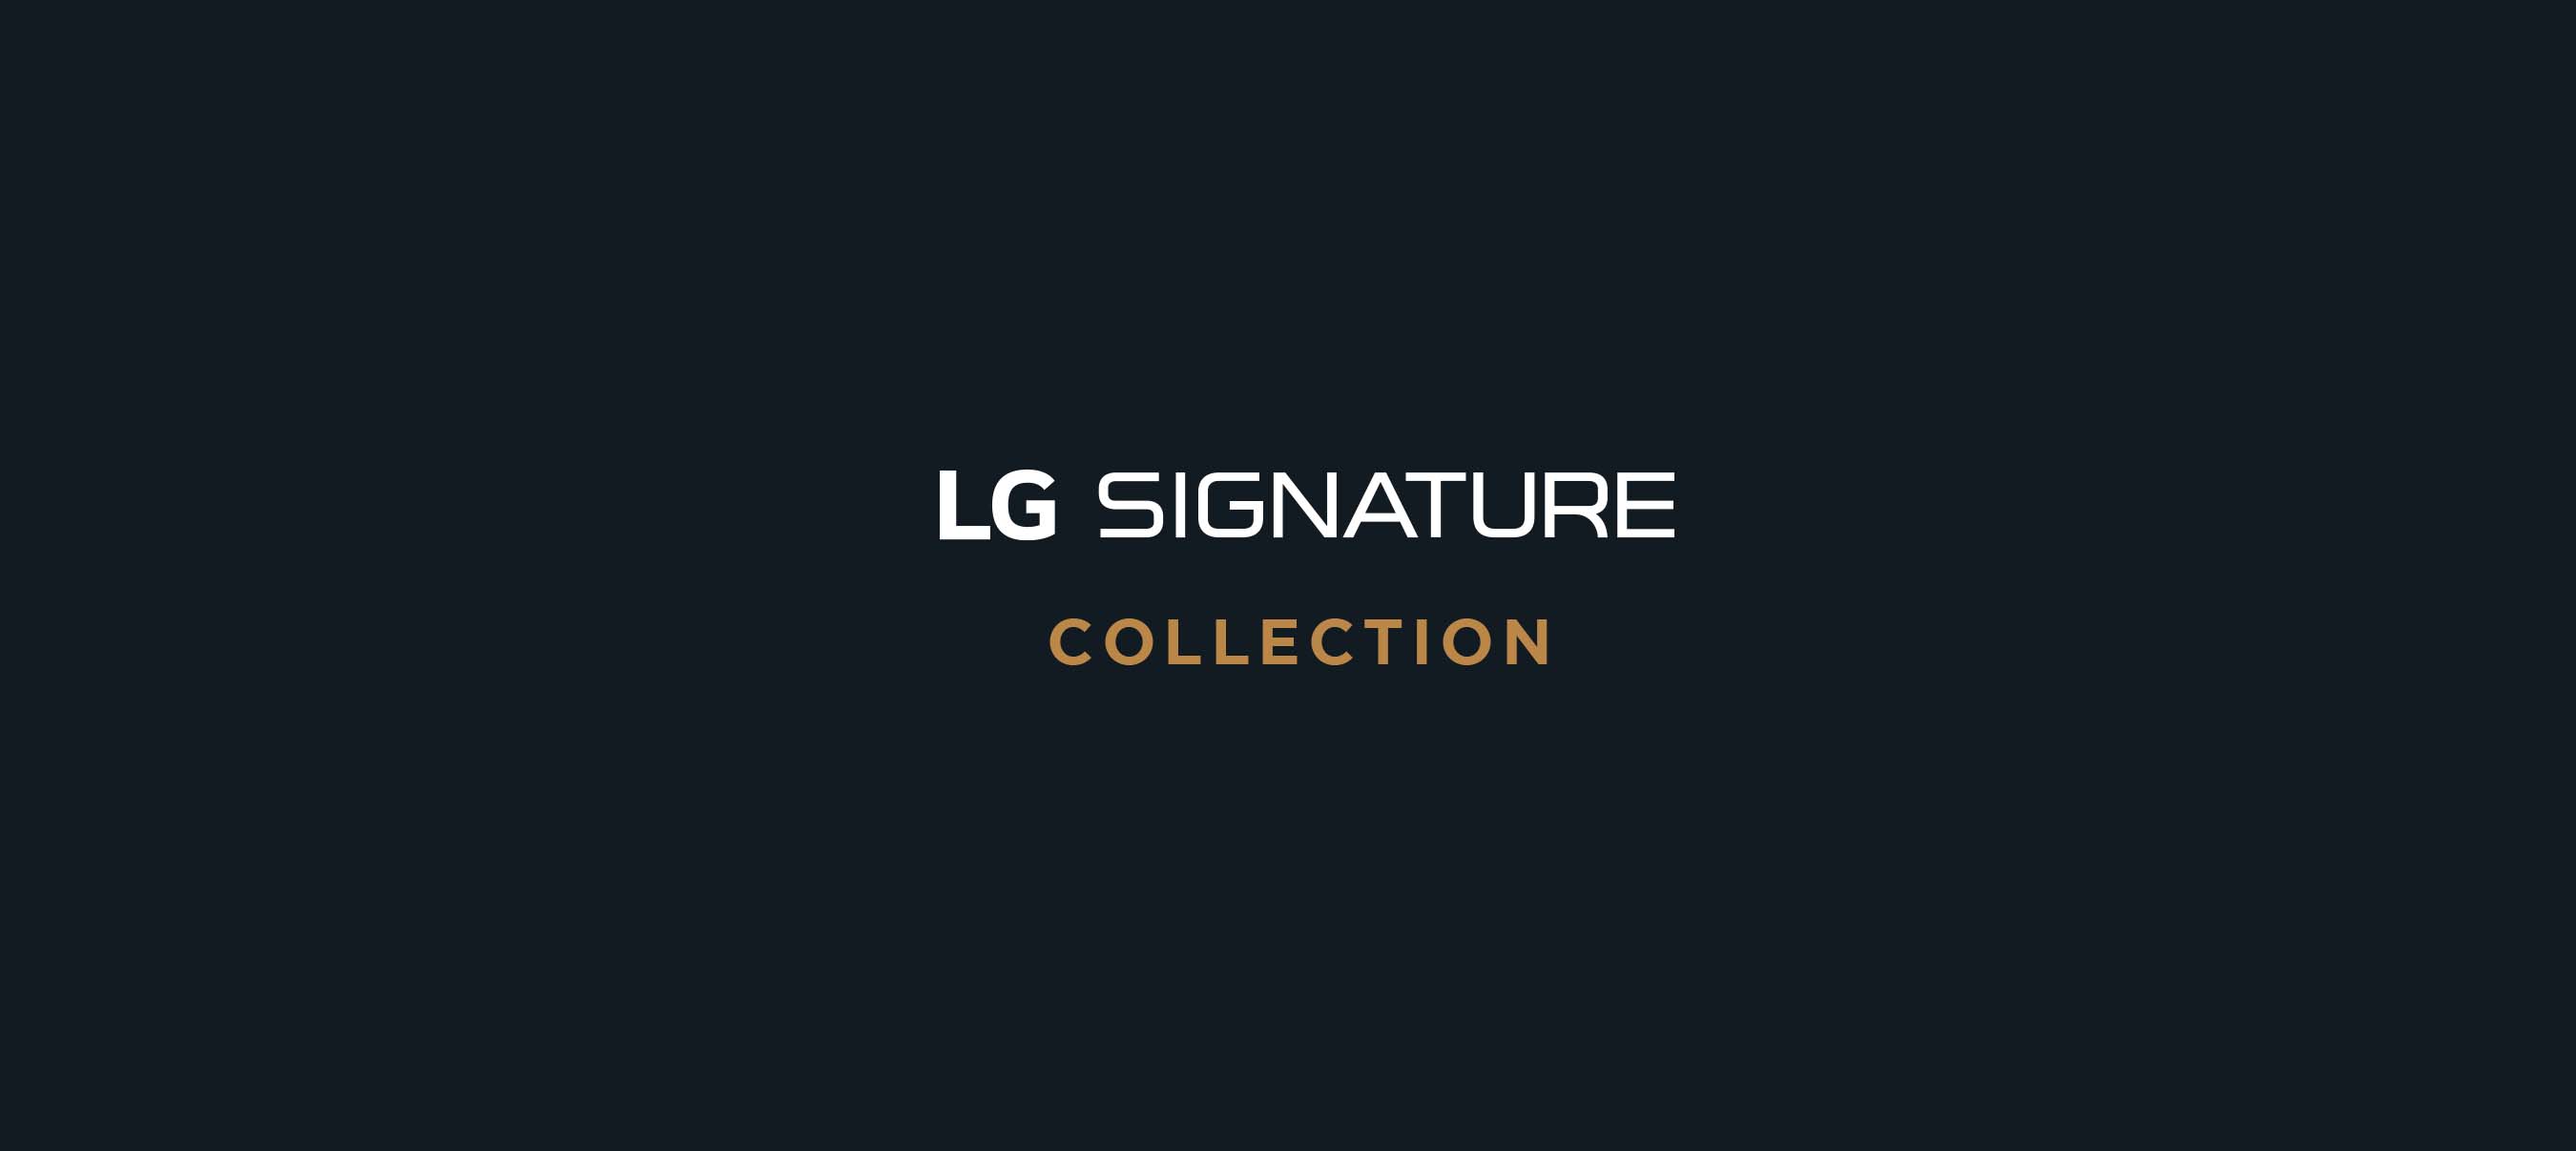 LG SIGNATURE Product Fact Sheet